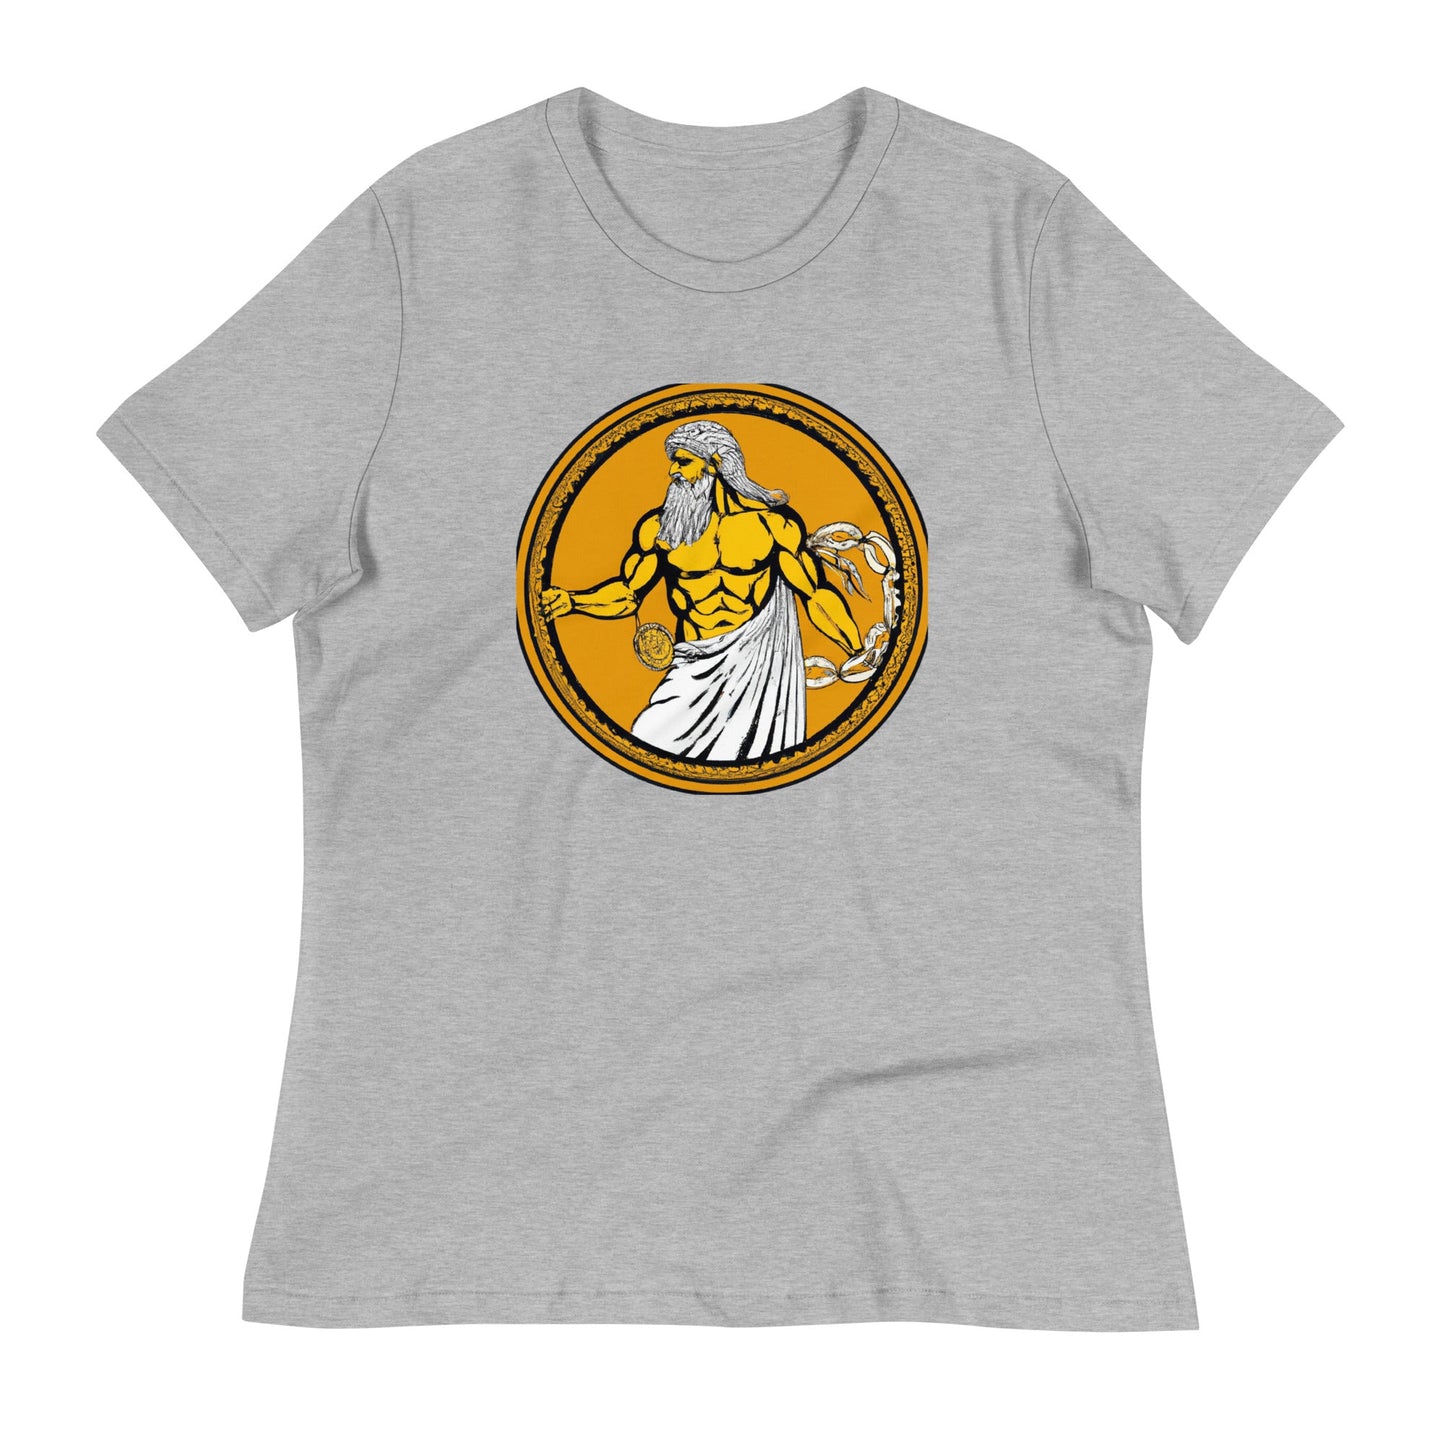 Zeus T-Shirt Women